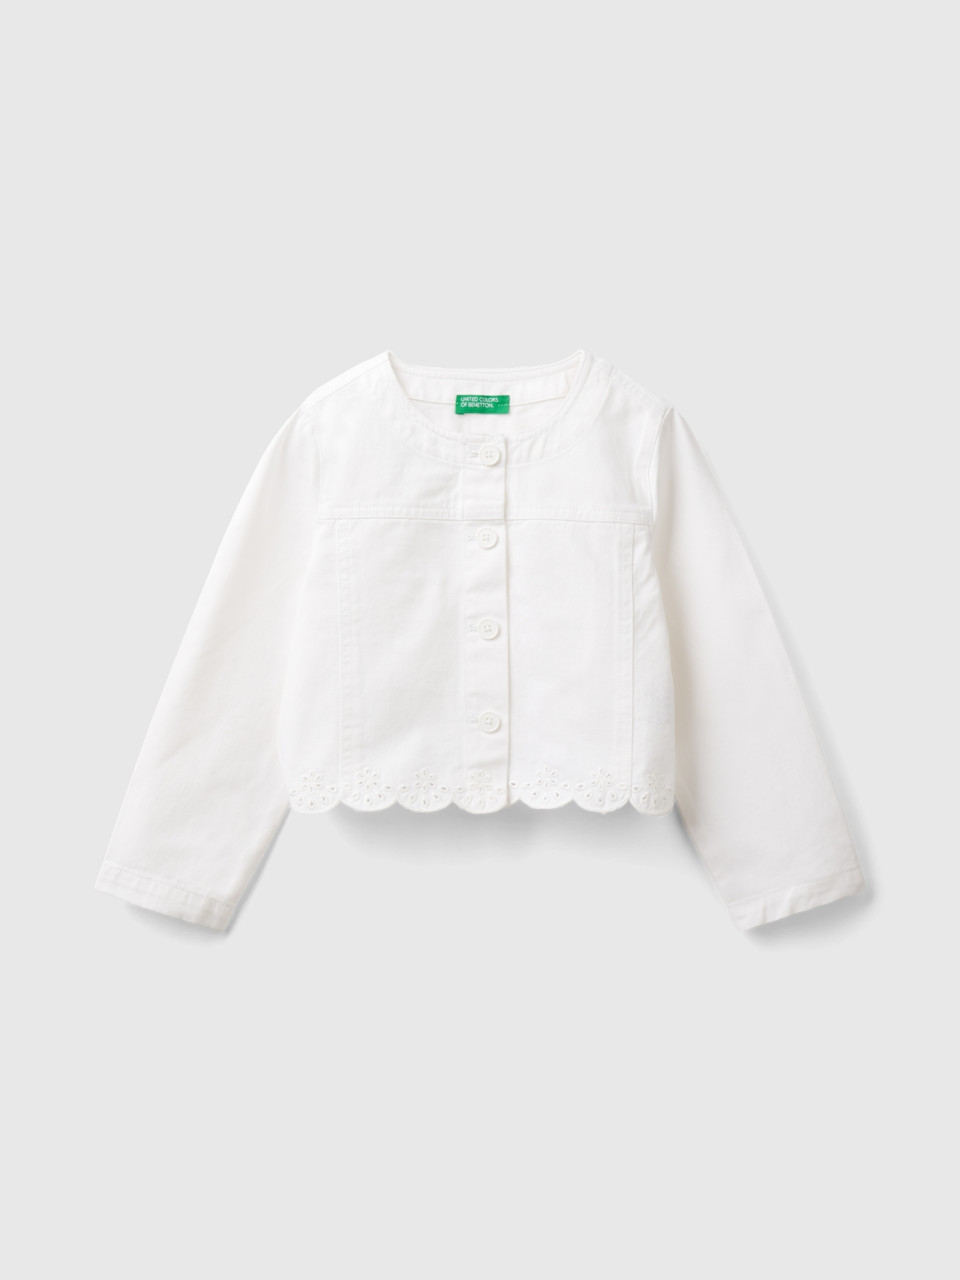 Benetton, Elegant Jacket With Embroidery, White, Kids